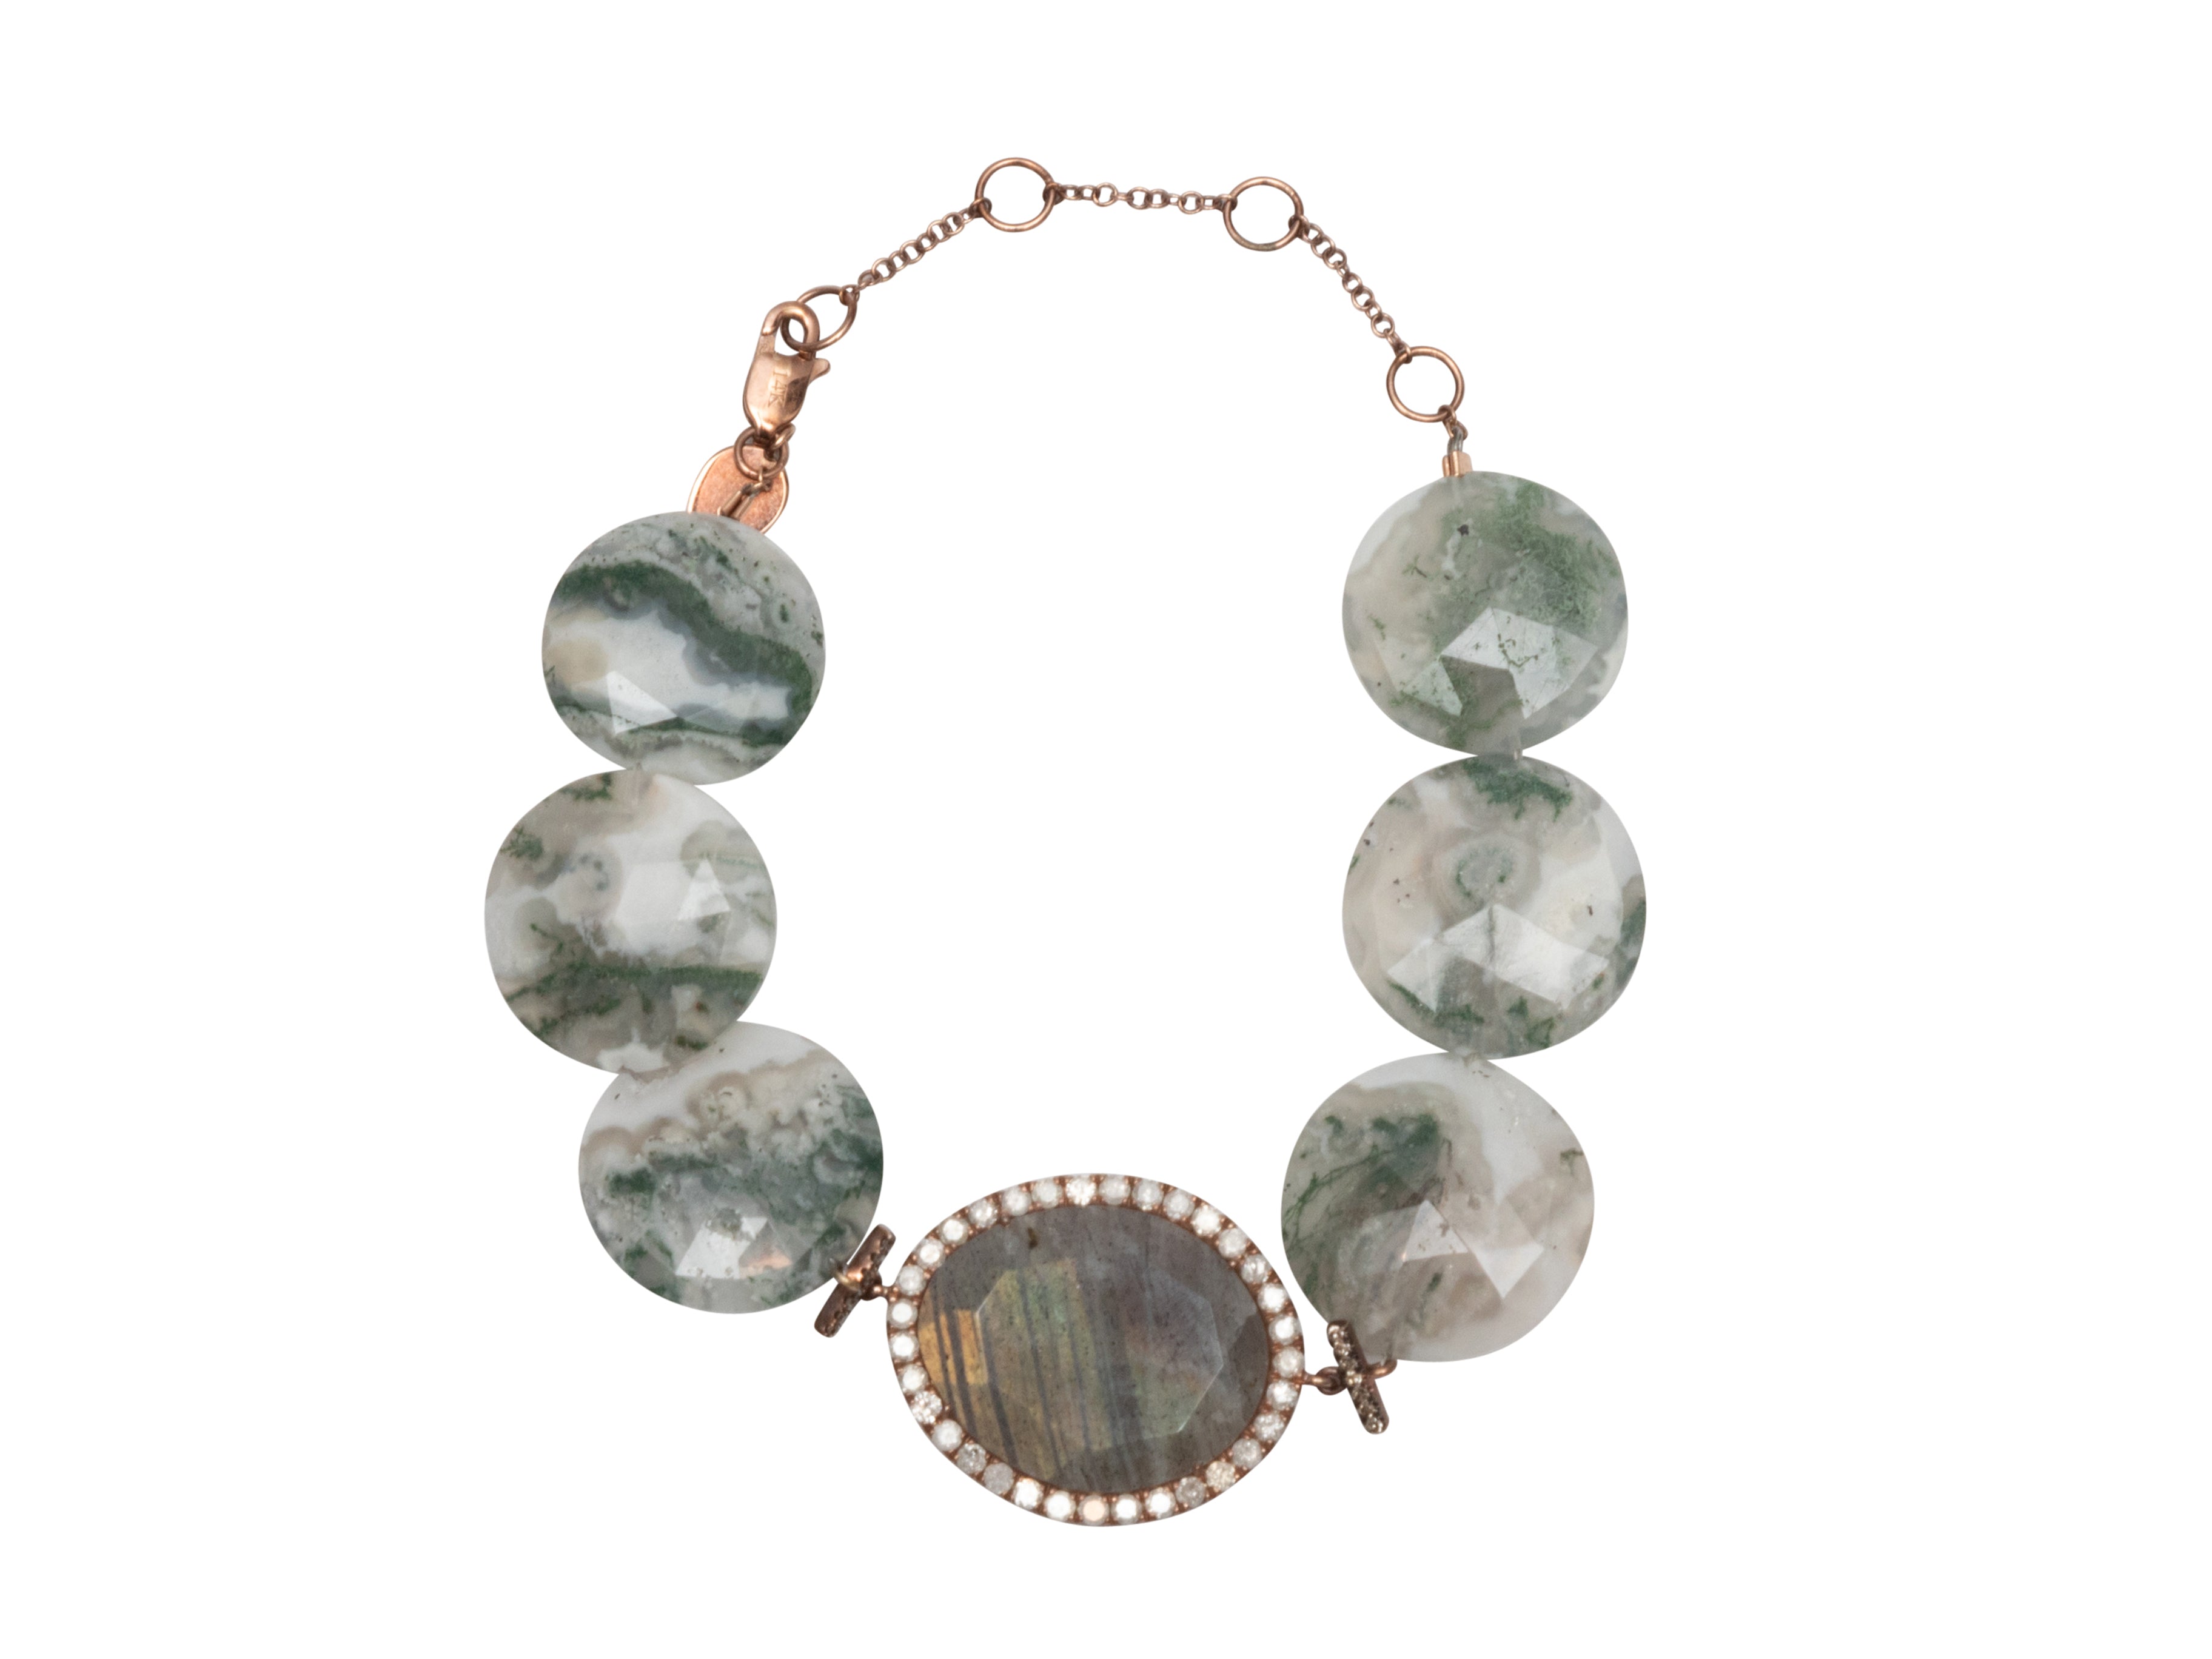 Louis Vuitton Necklace on Jasper Beads